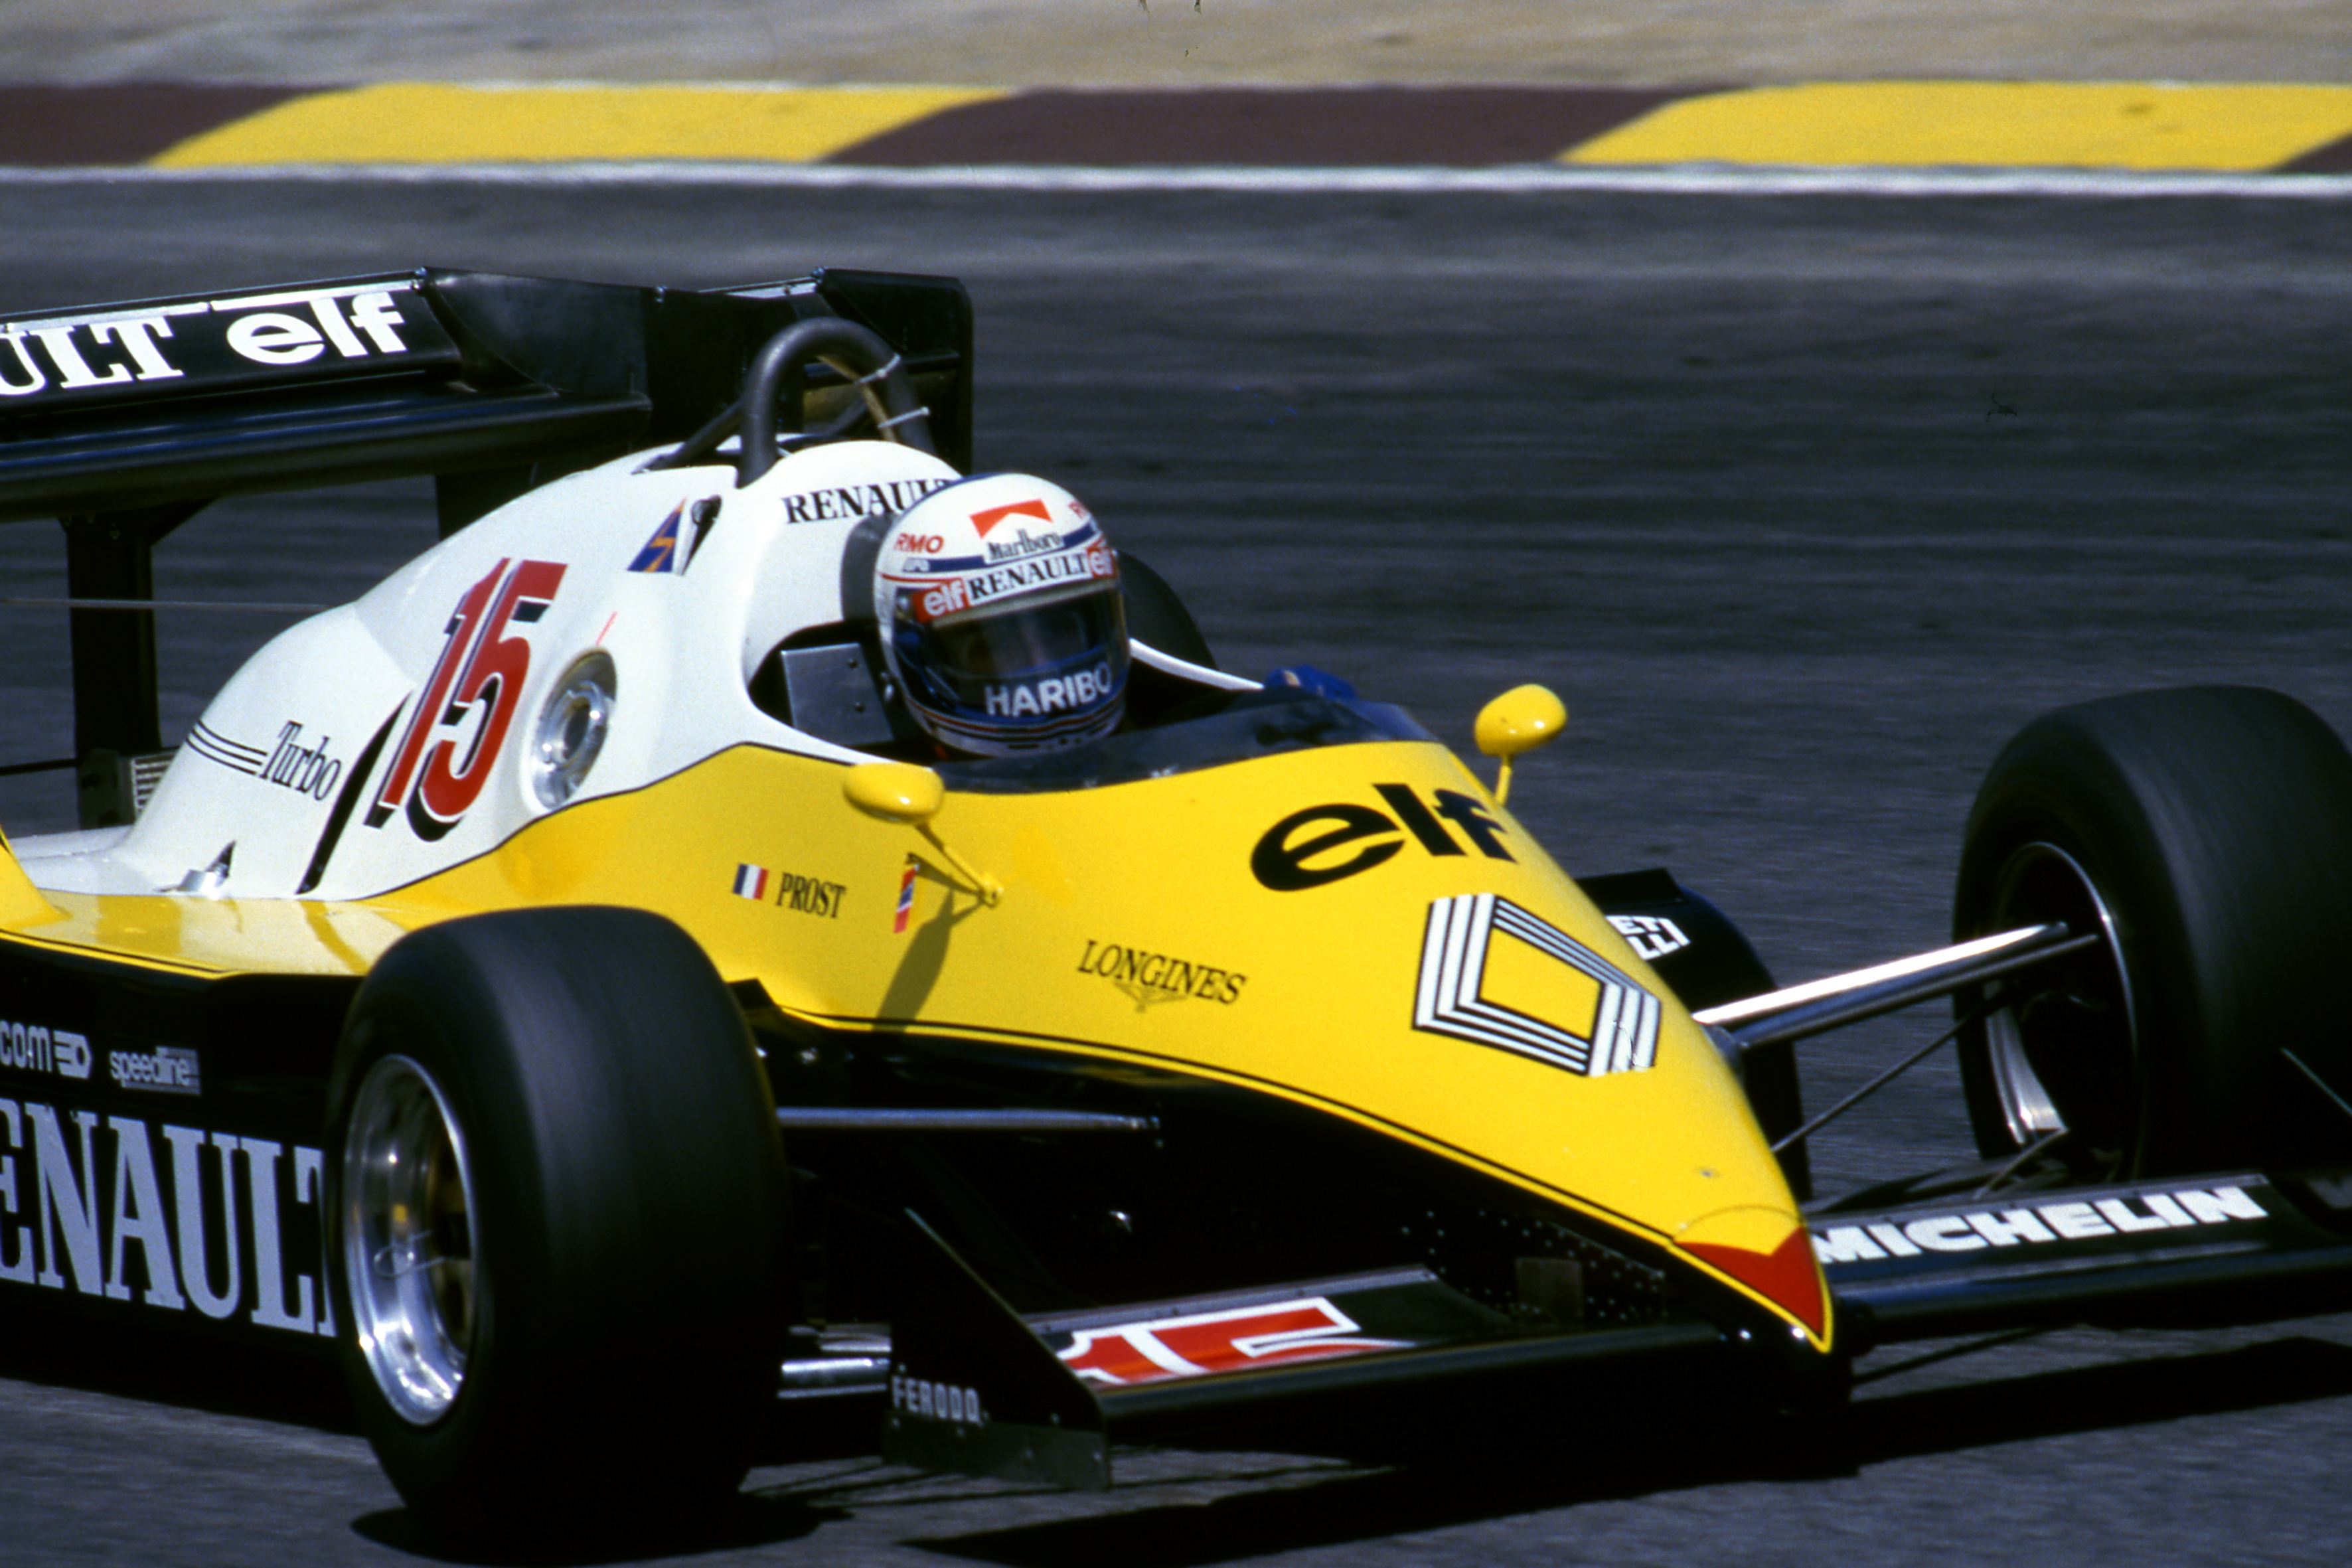 South Africa Grand Prix Kyalami (rsa) 13 15 10 1983